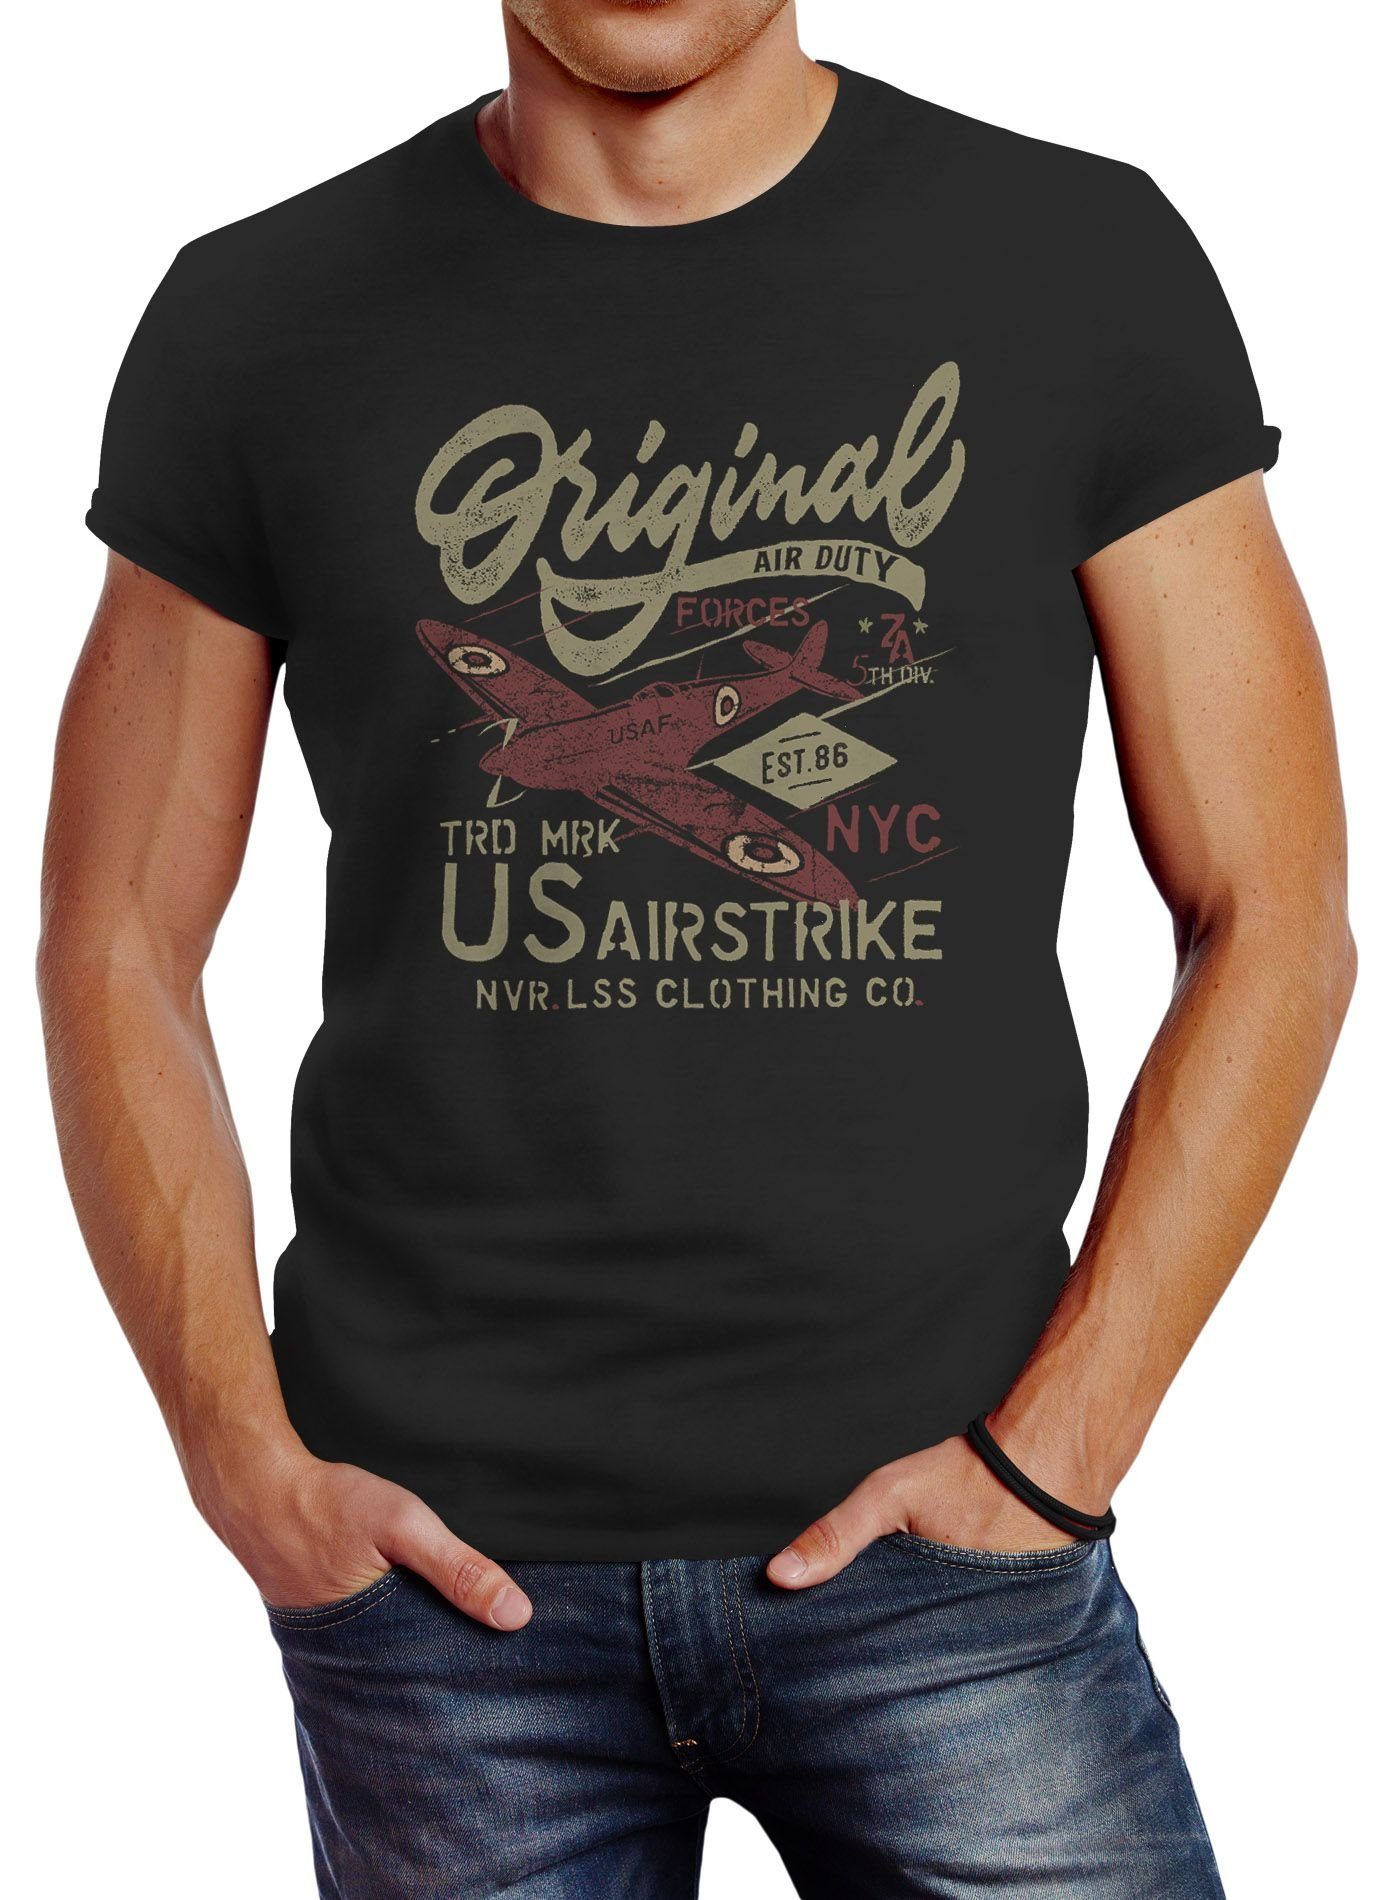 Herren Motiv T-Shirt schwarz Neverless Fashion Streetstyle mit US Airforce Neverless® Retro Vintage Schriftzug Spitfire Print Flugzeug Army Motiv Print-Shirt